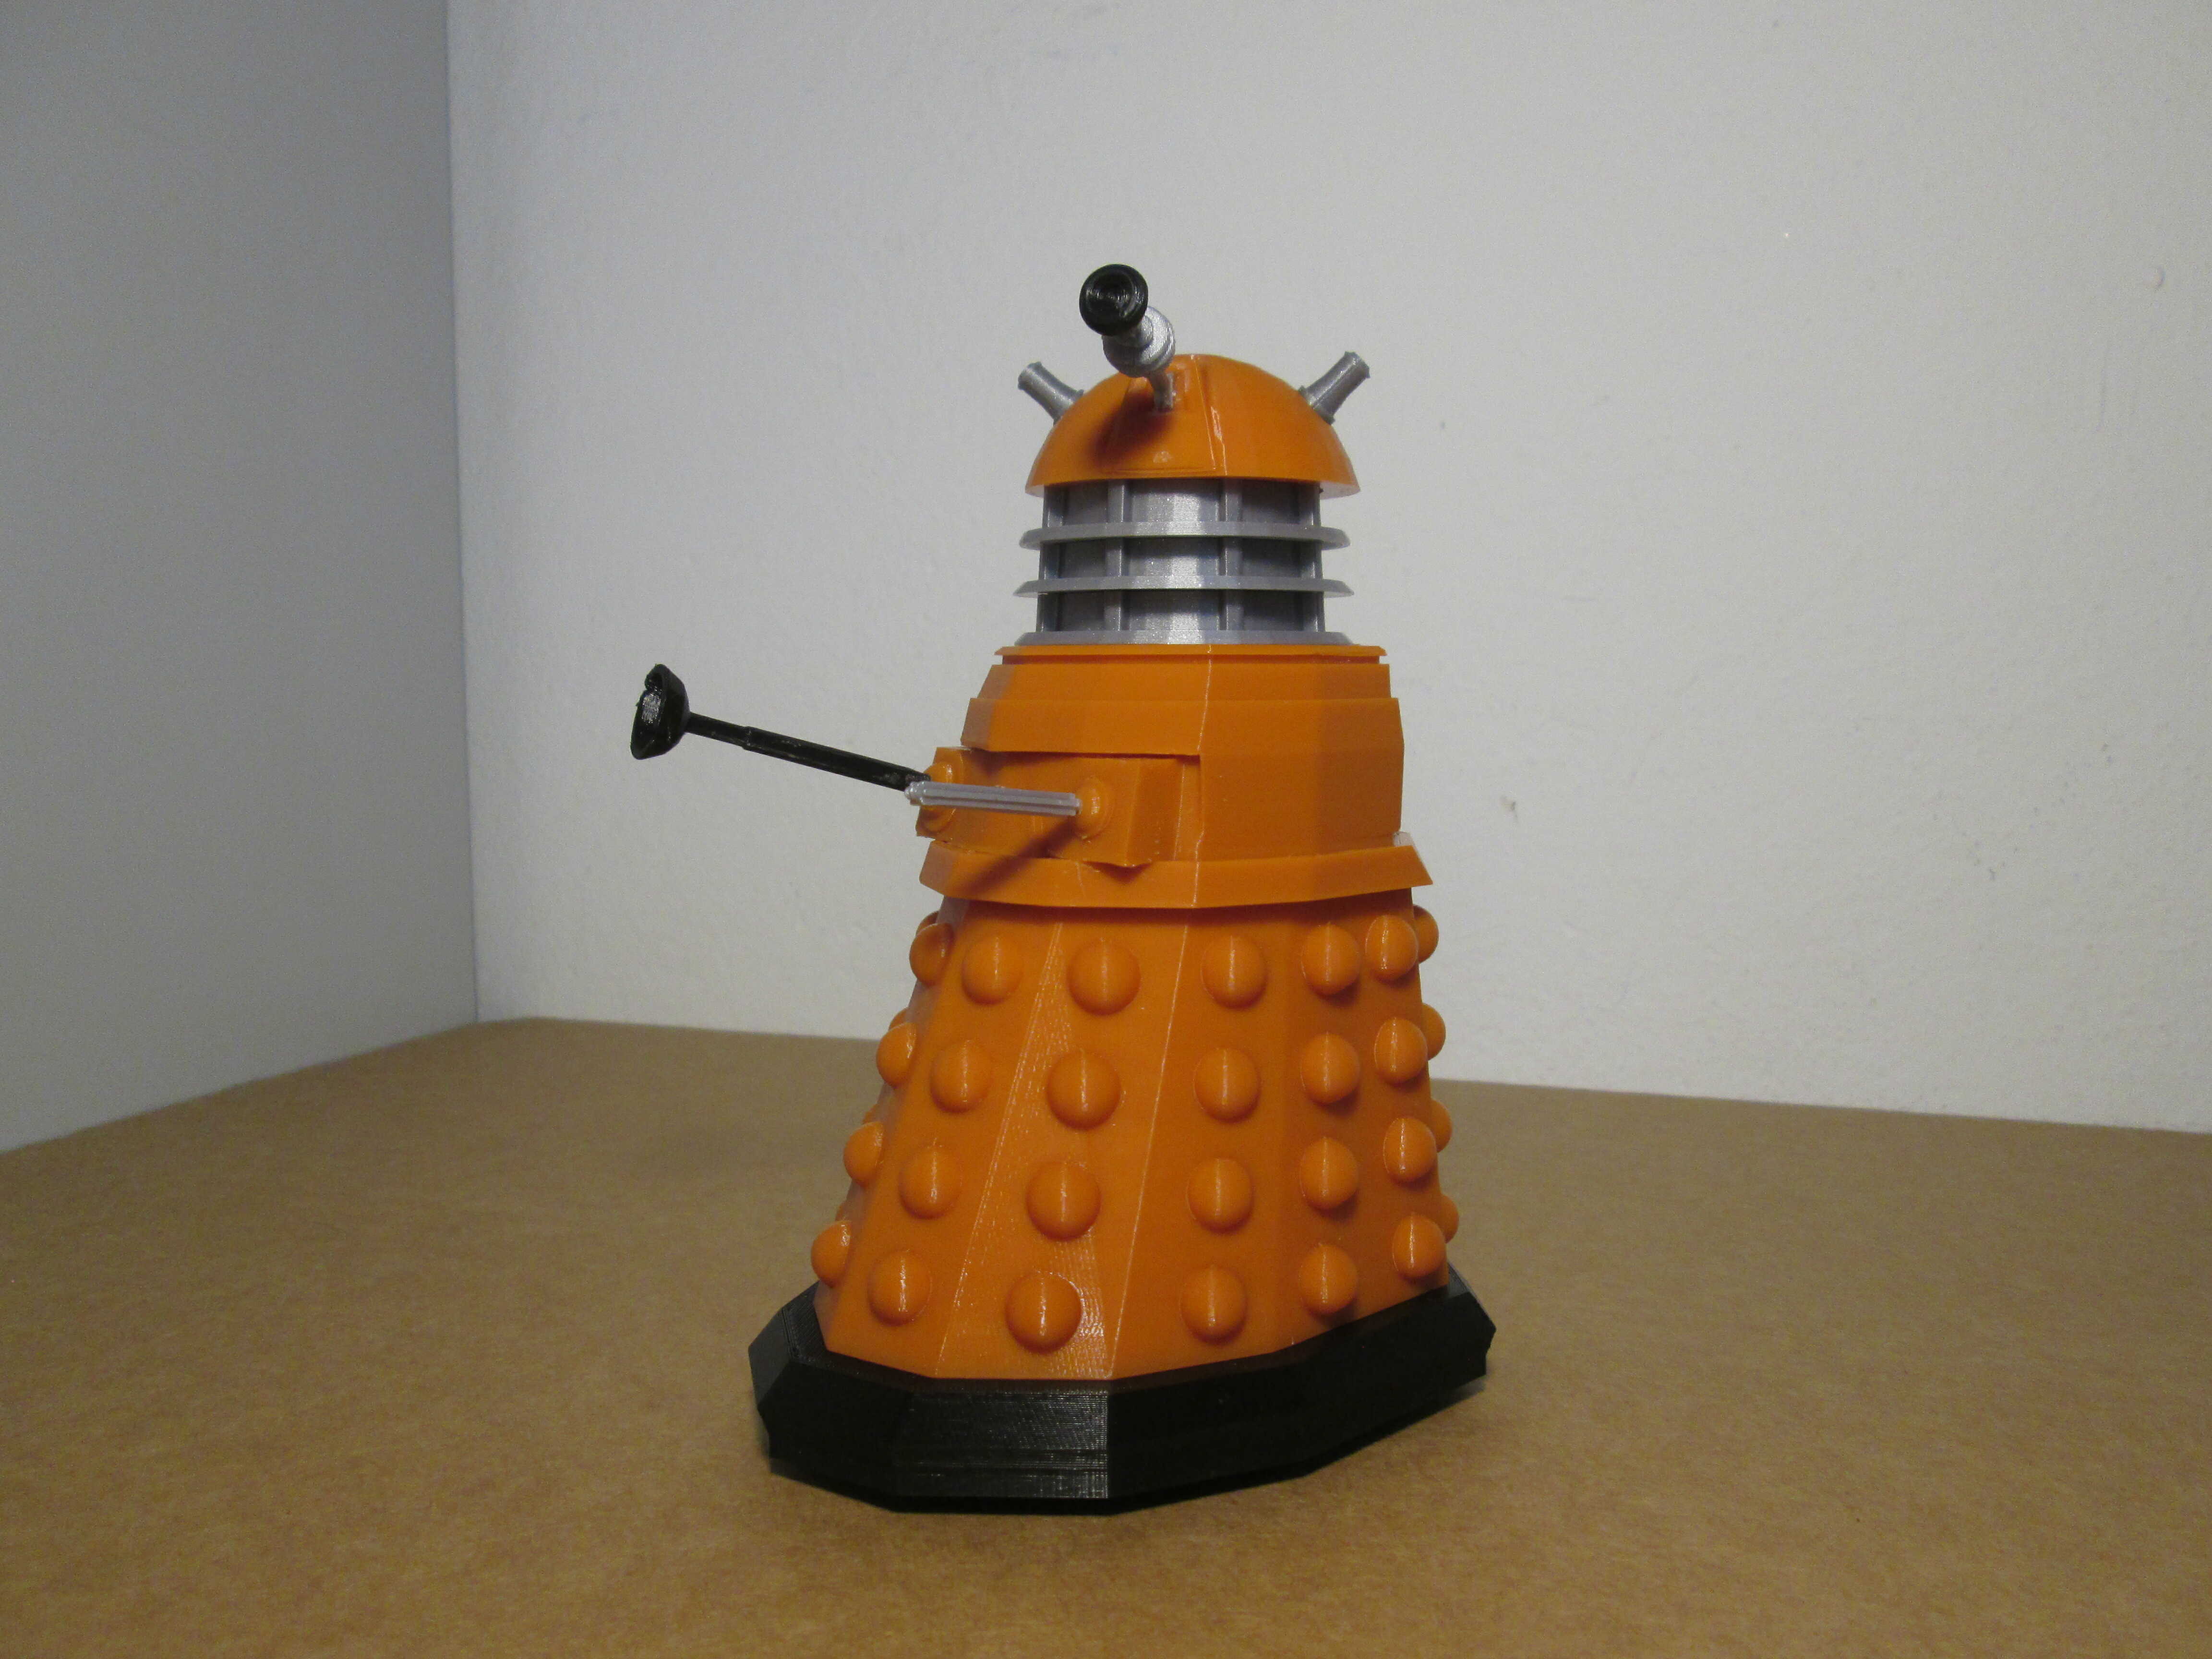 Doctor Who - Dalek